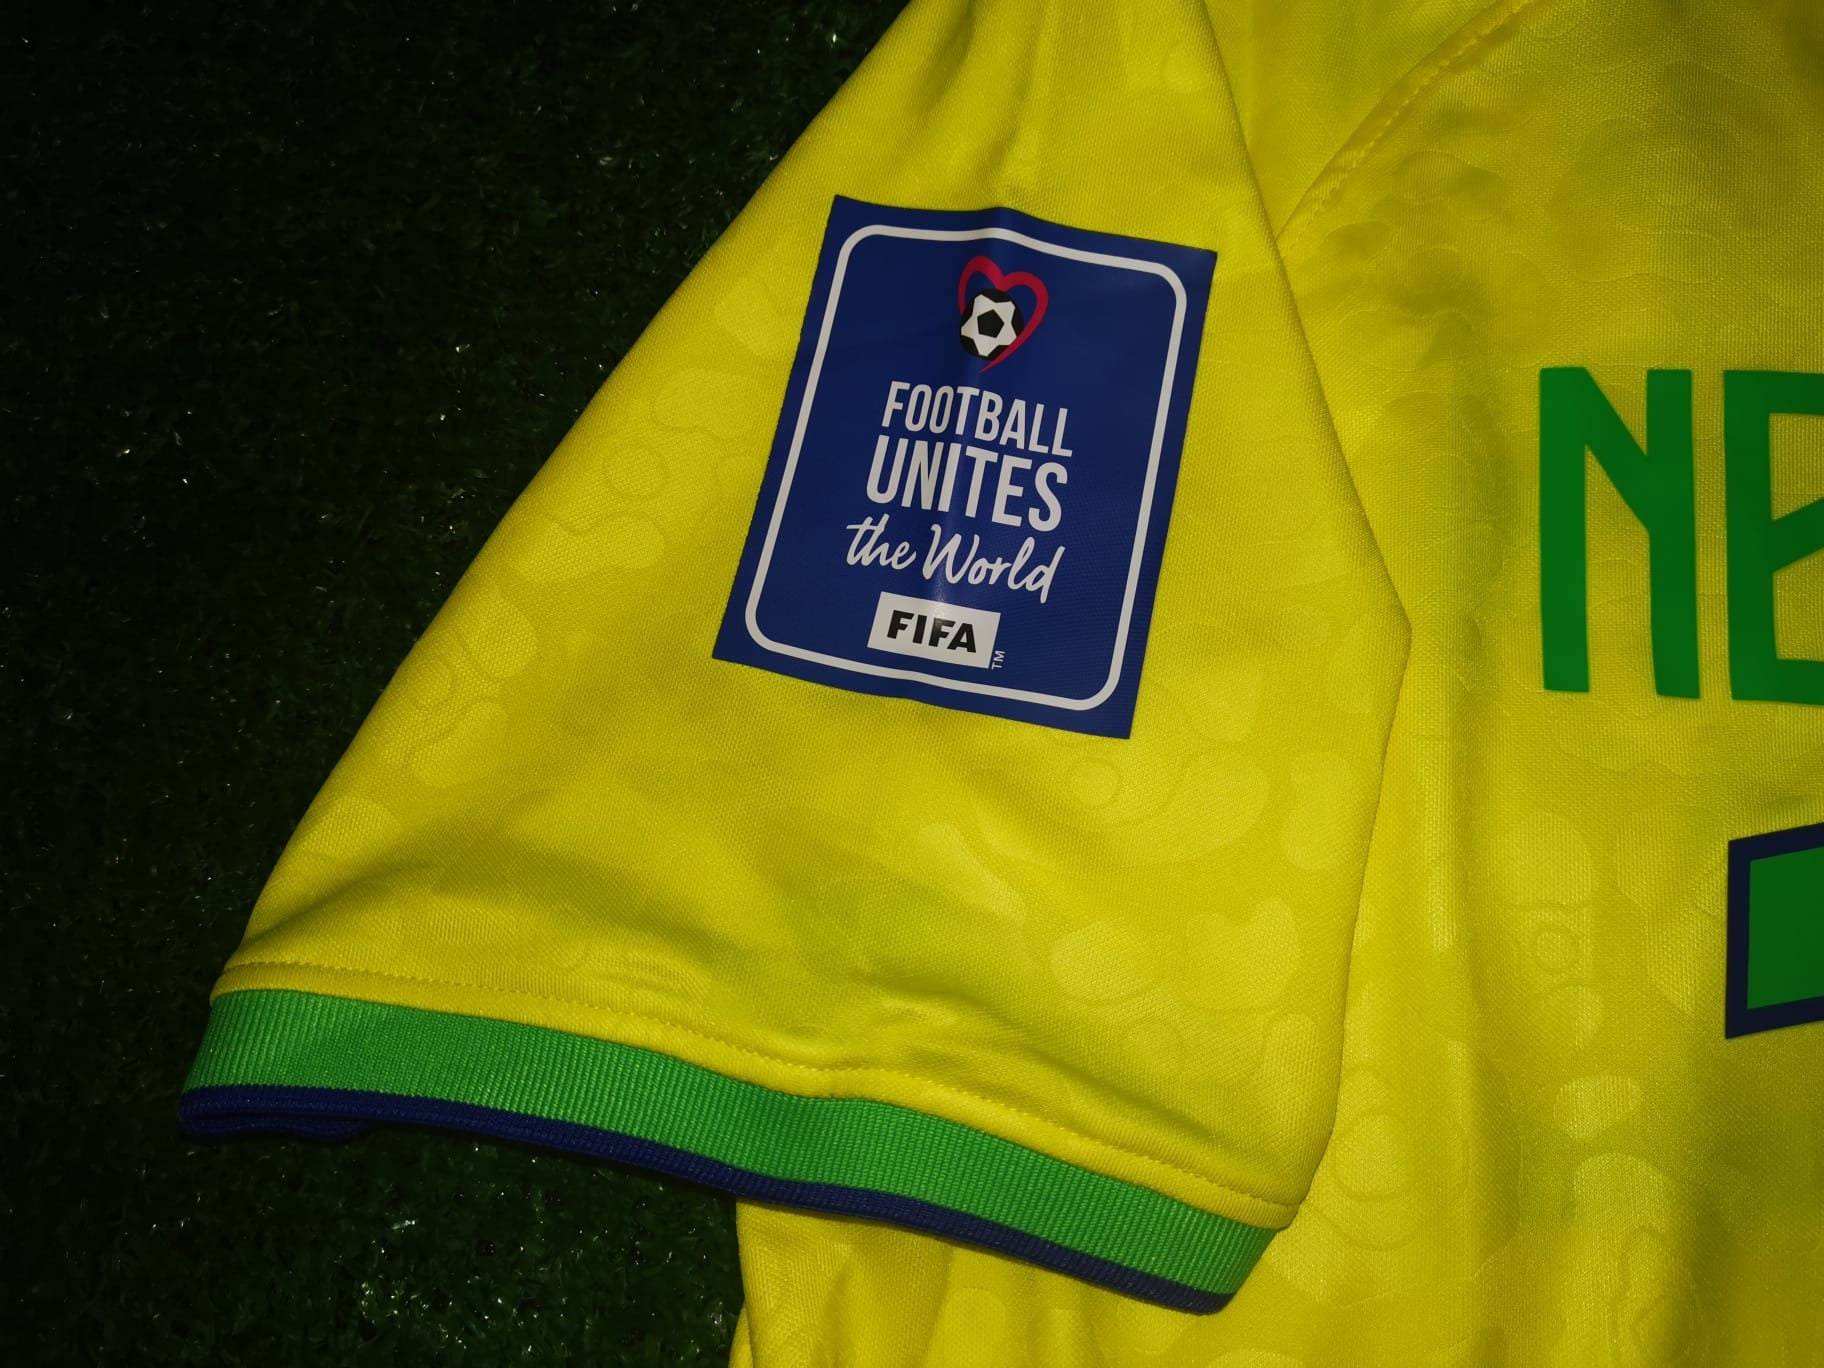 Camiseta firmada por Neymar Jr Brazil 2016-17 – Cracks Memorabilia